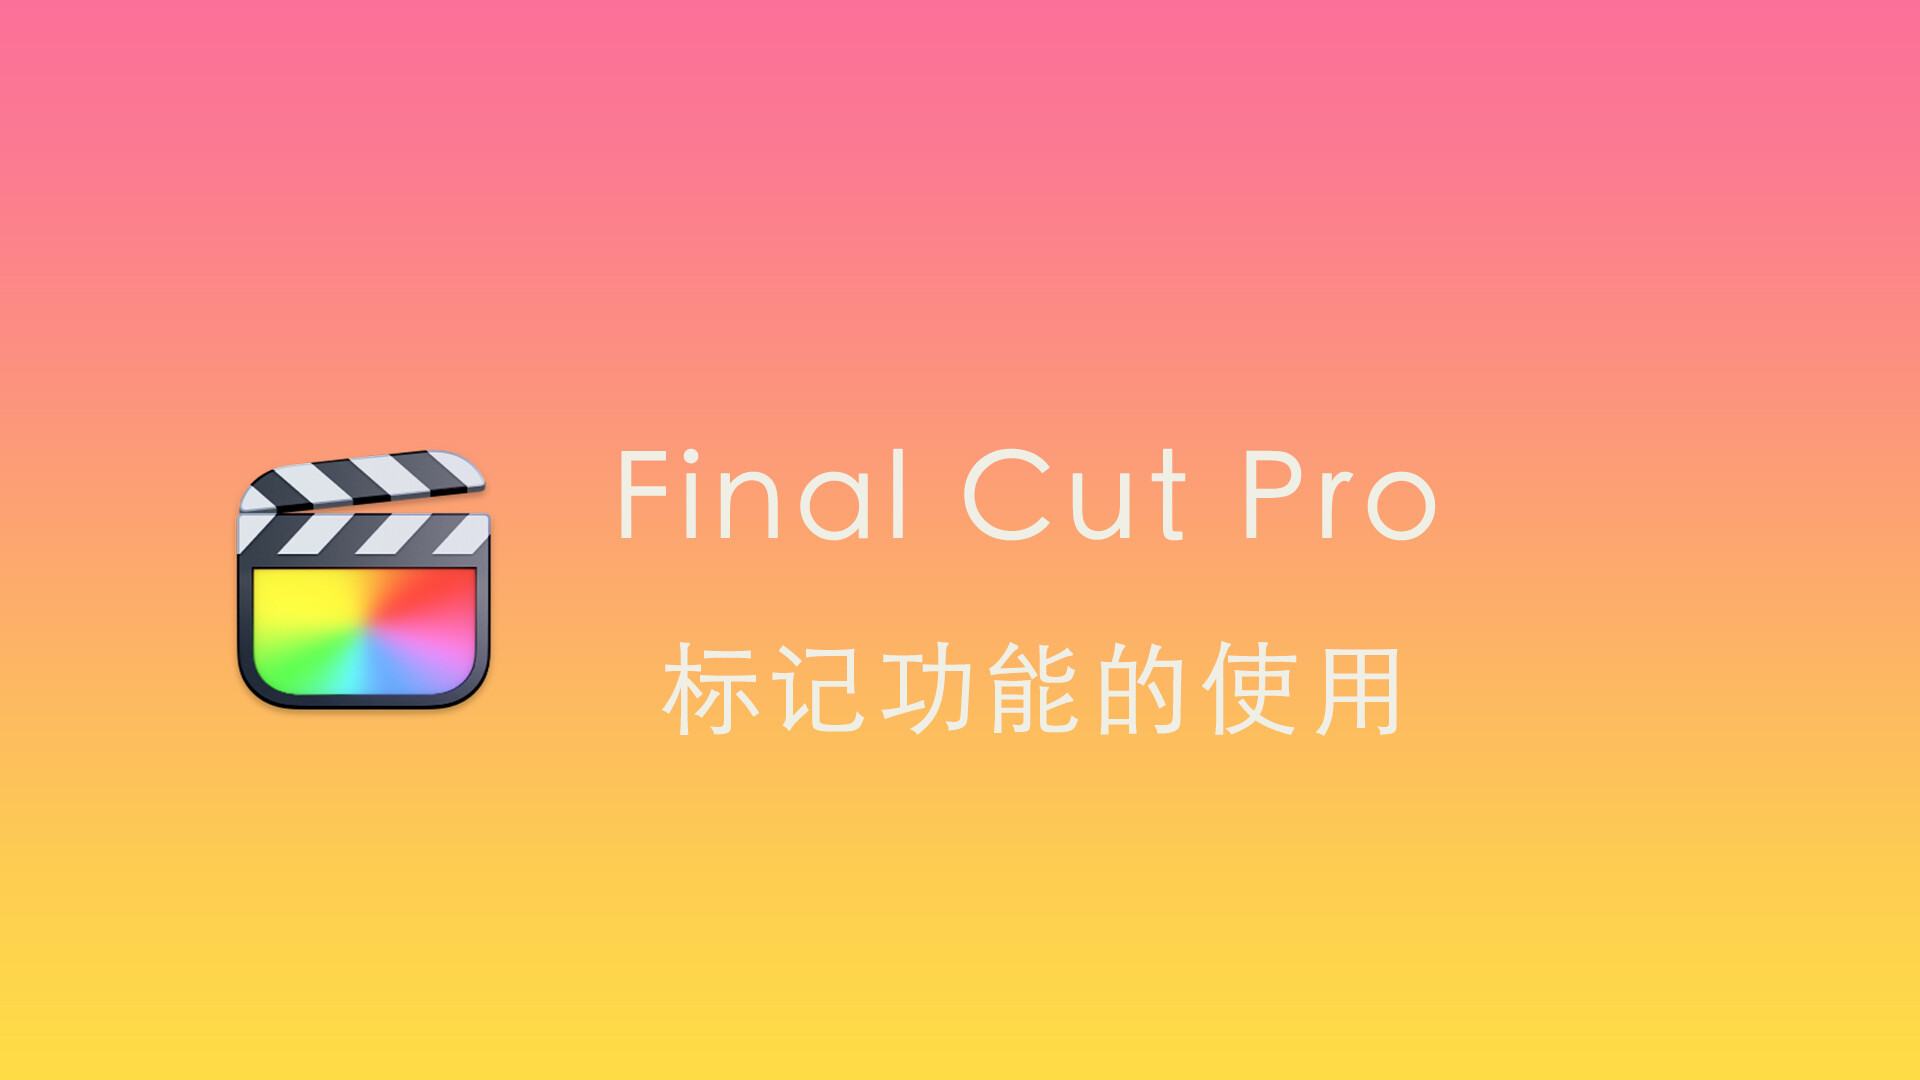 Final Cut Pro中文教程(38)：fcpx标记功能如何使用？fcpx标记快捷键有哪些？